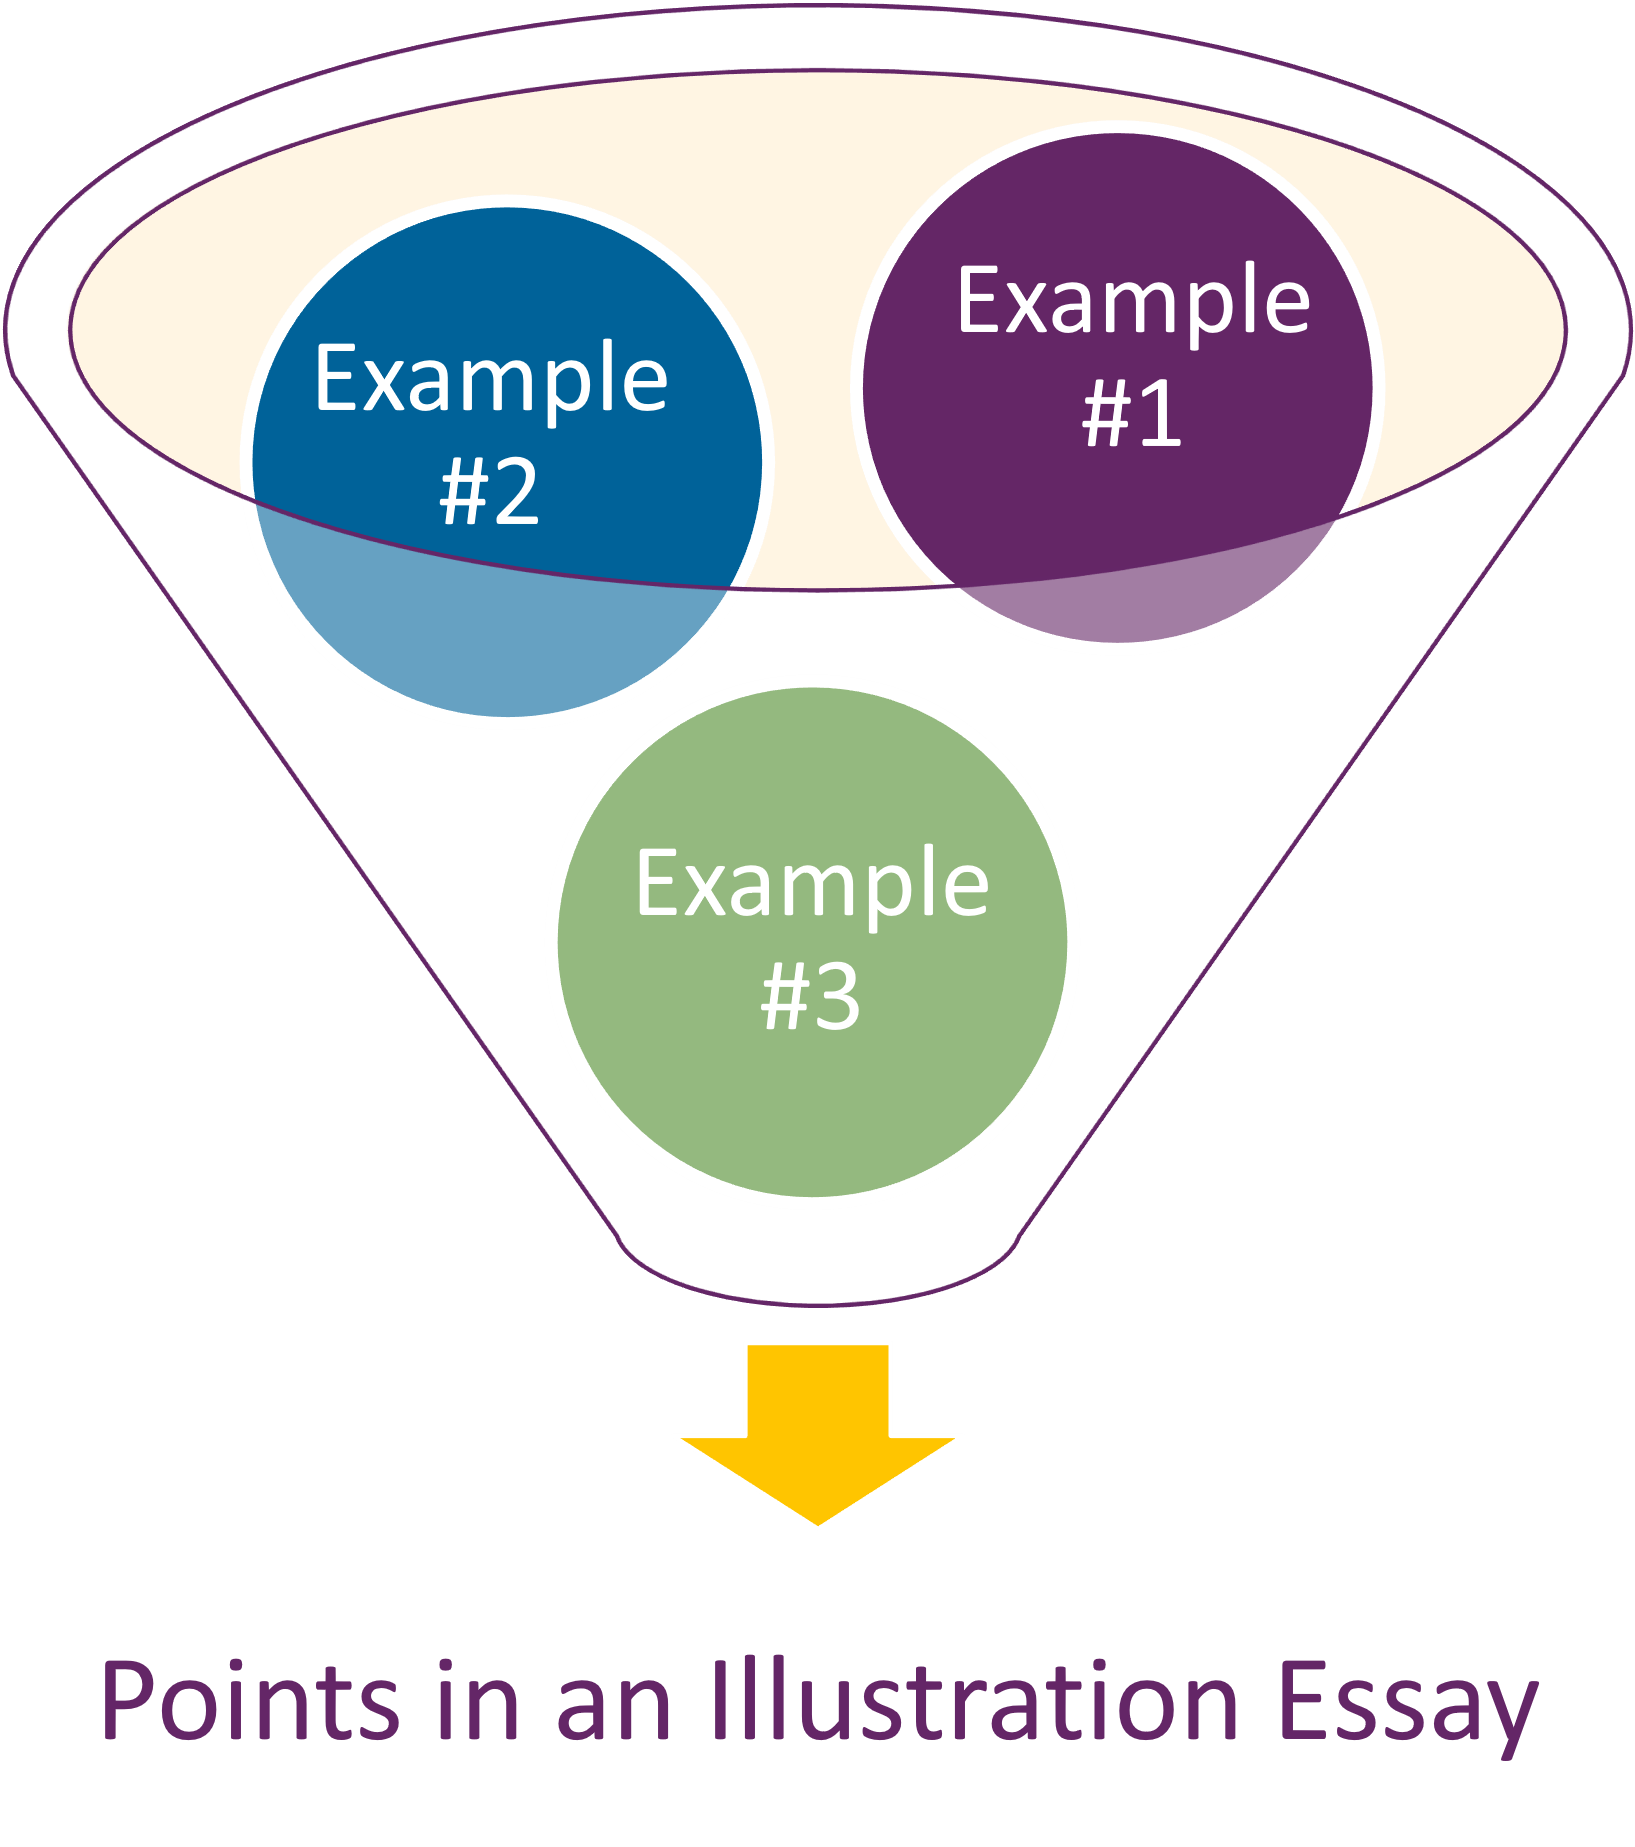 An illustration essay diagram